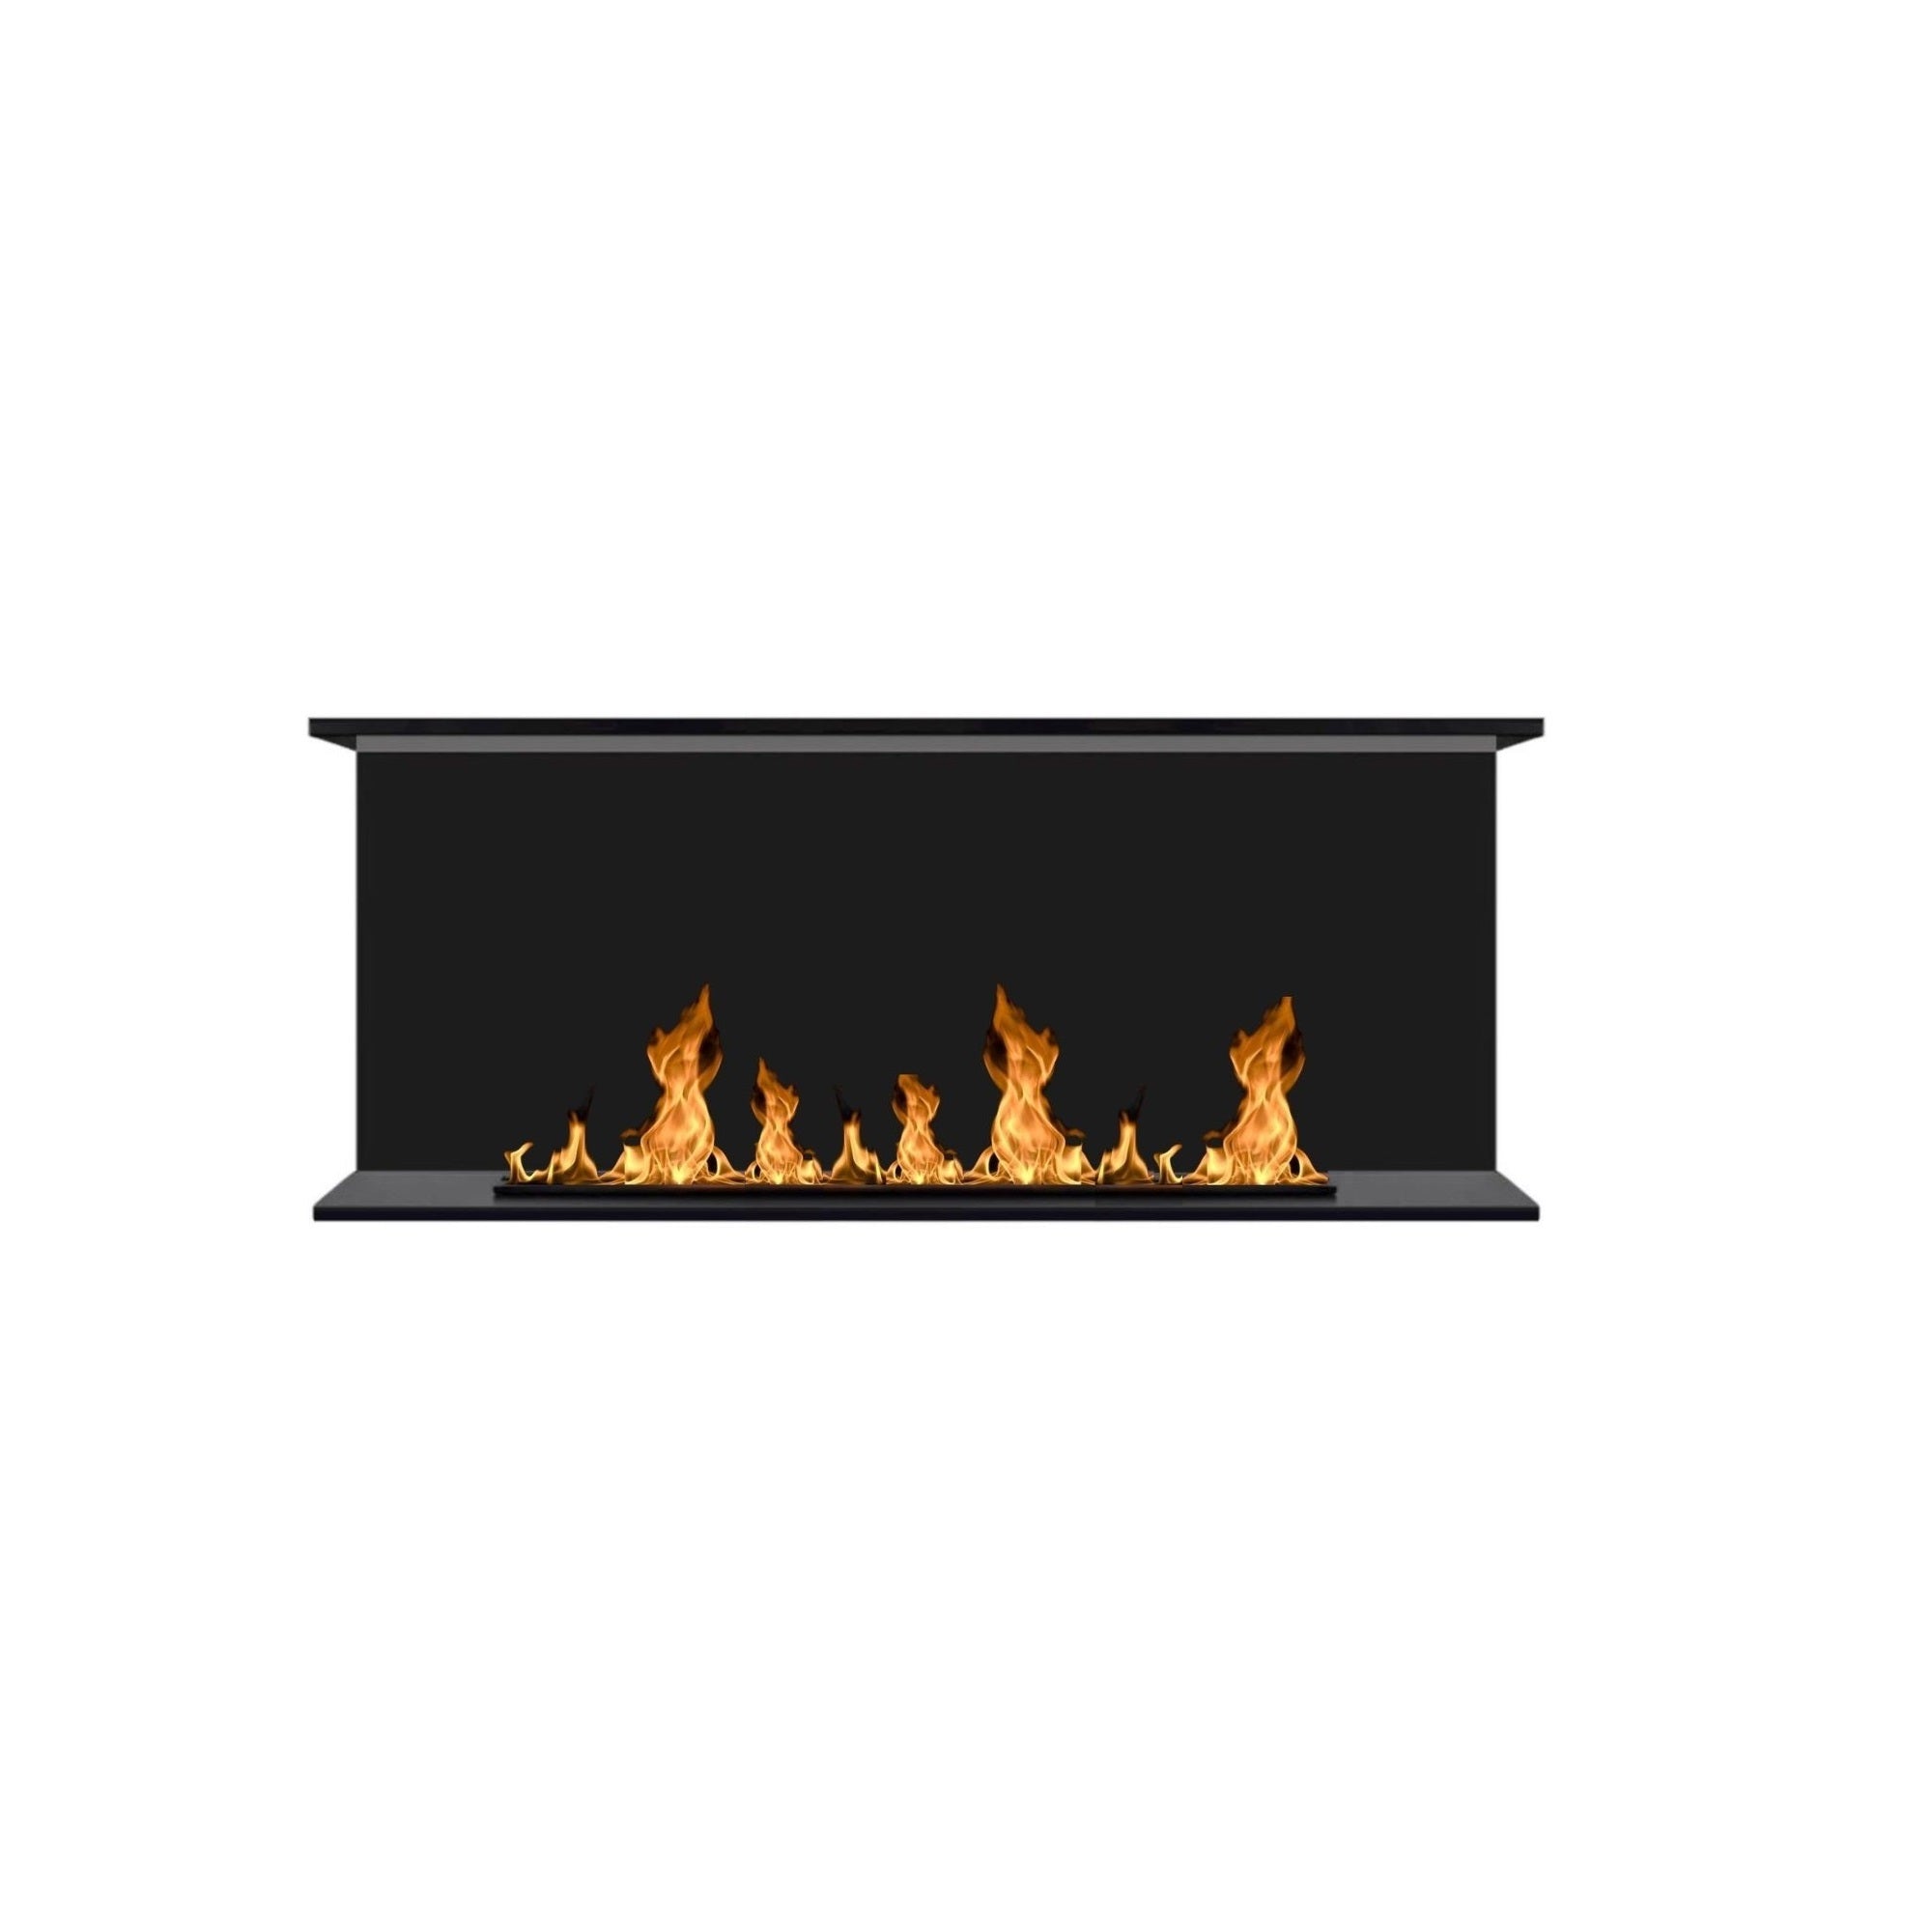 Izala Design Built-in Fireplace 75 CM